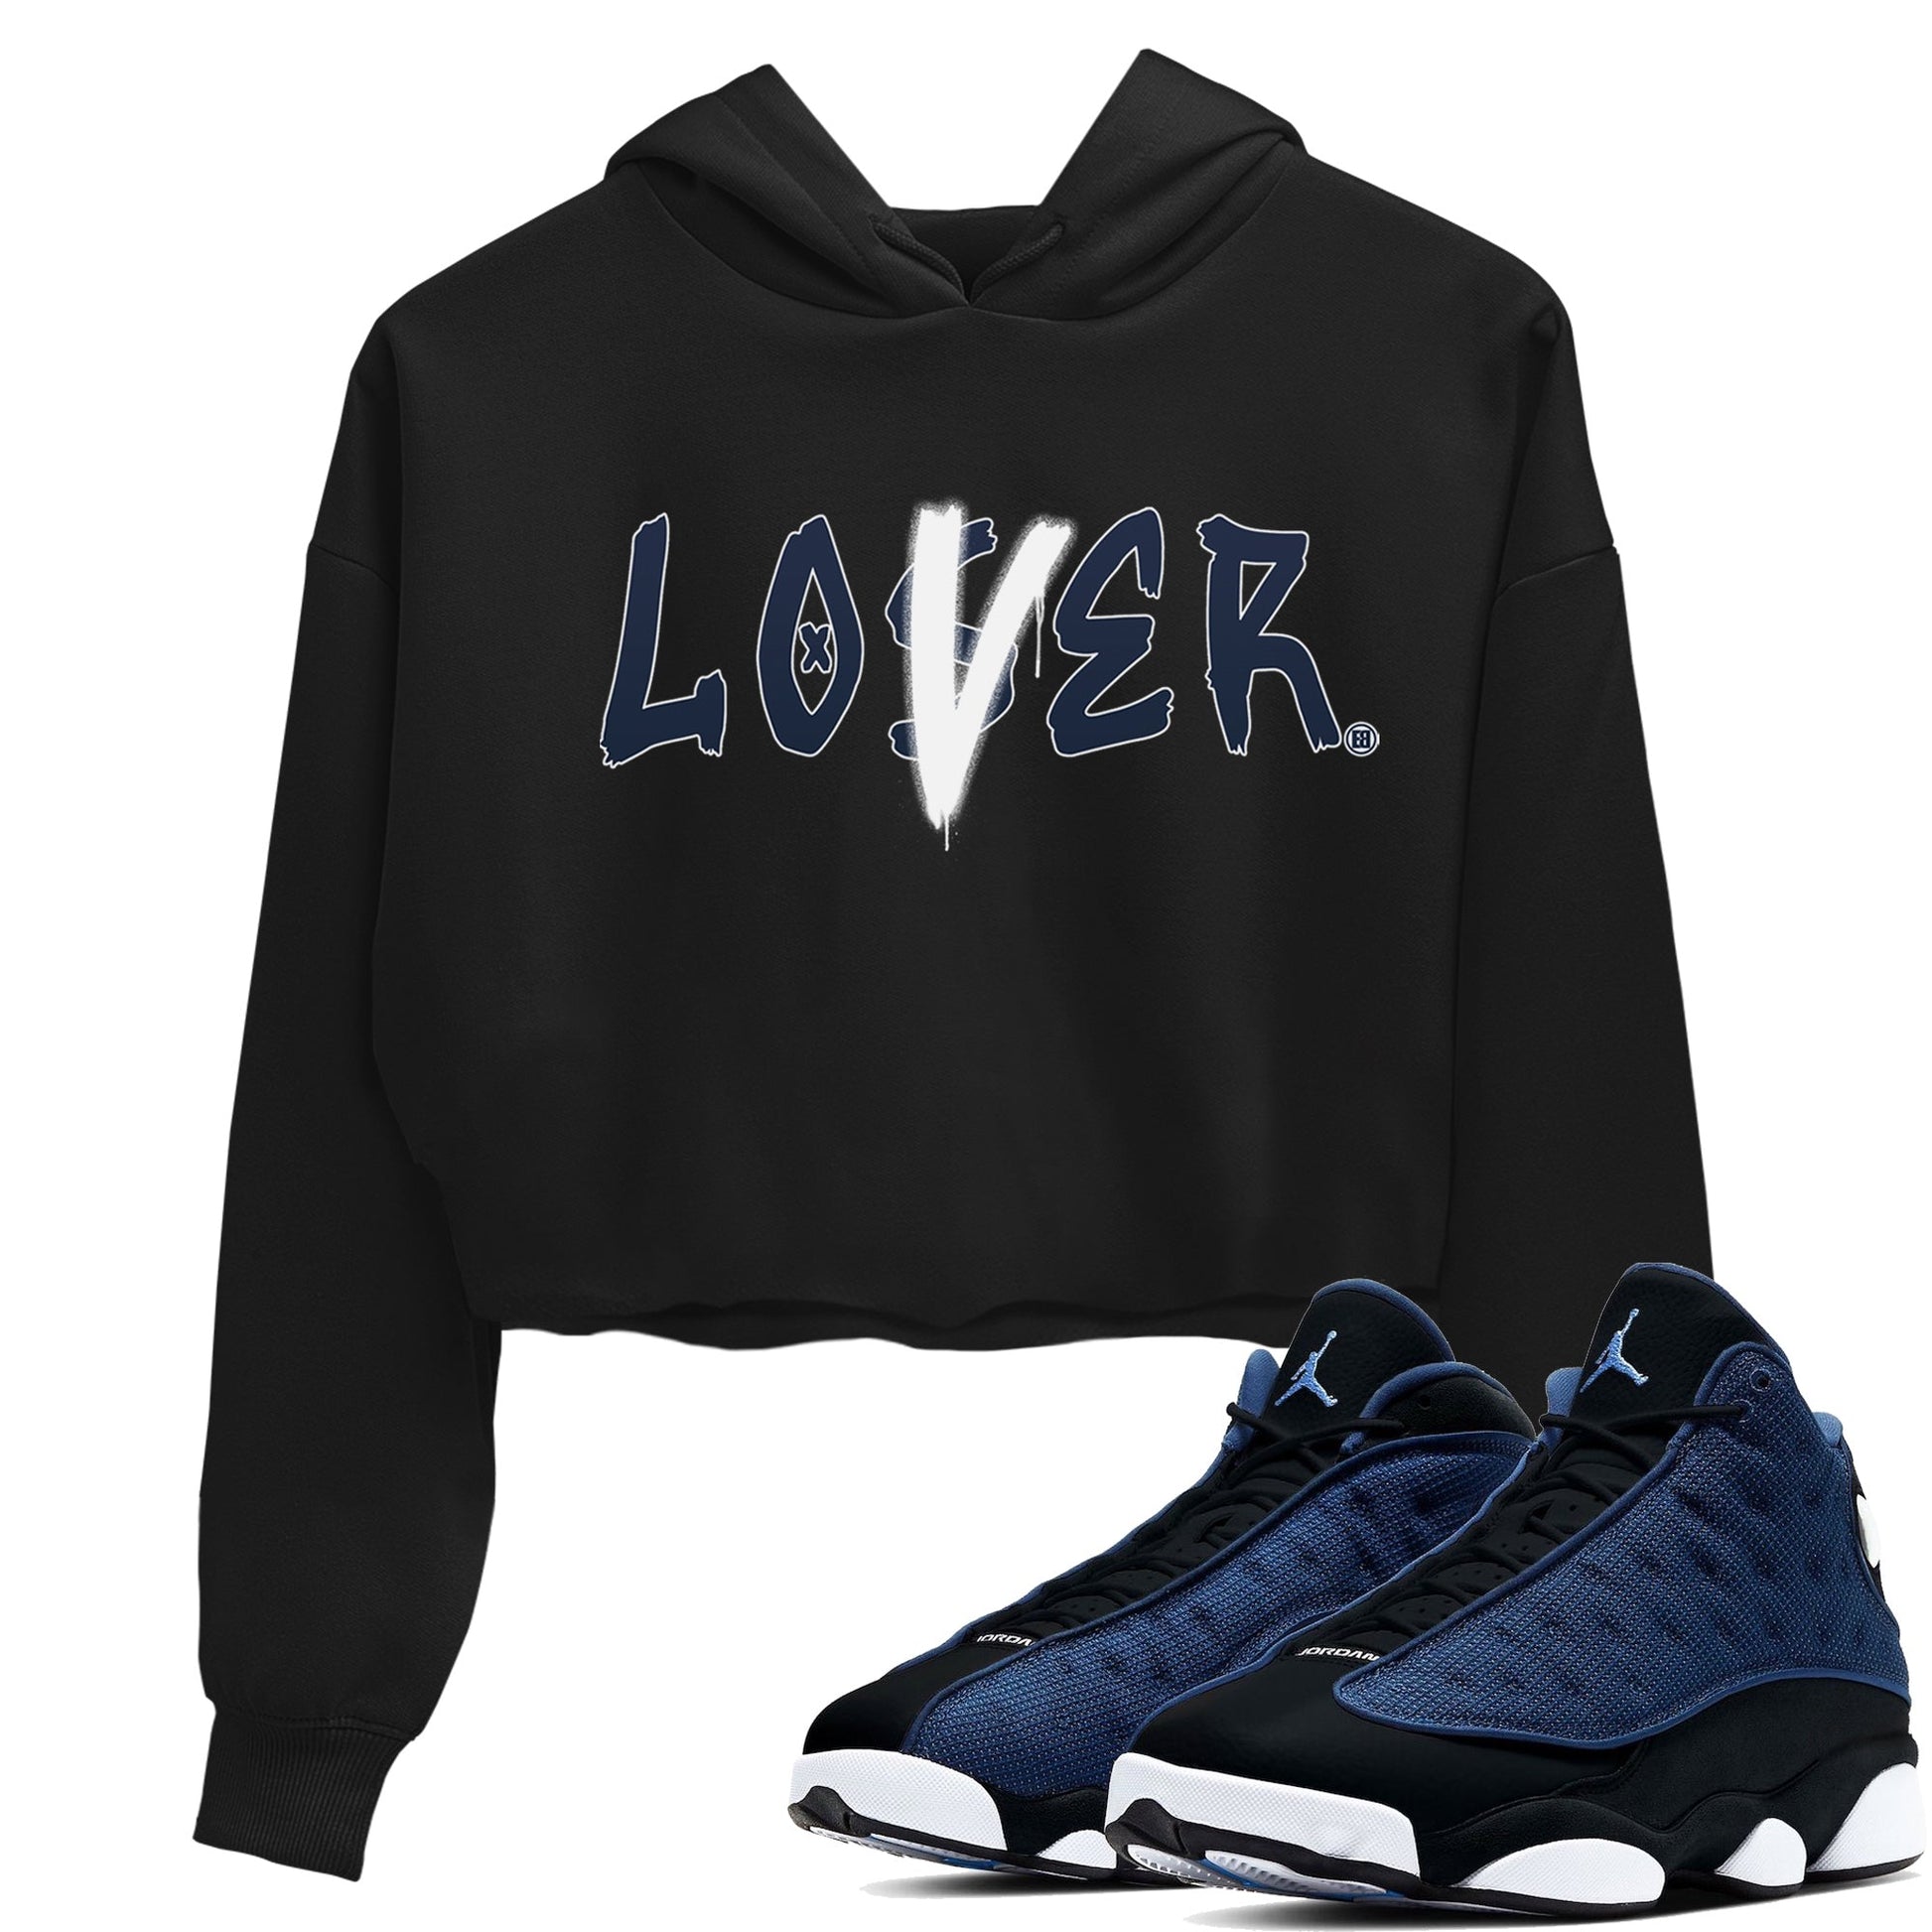 Jordan 13 Brave Blue Sneaker Match Tees Loser Lover Sneaker Tees Jordan 13 Brave Blue Sneaker Release Tees Women's Shirts